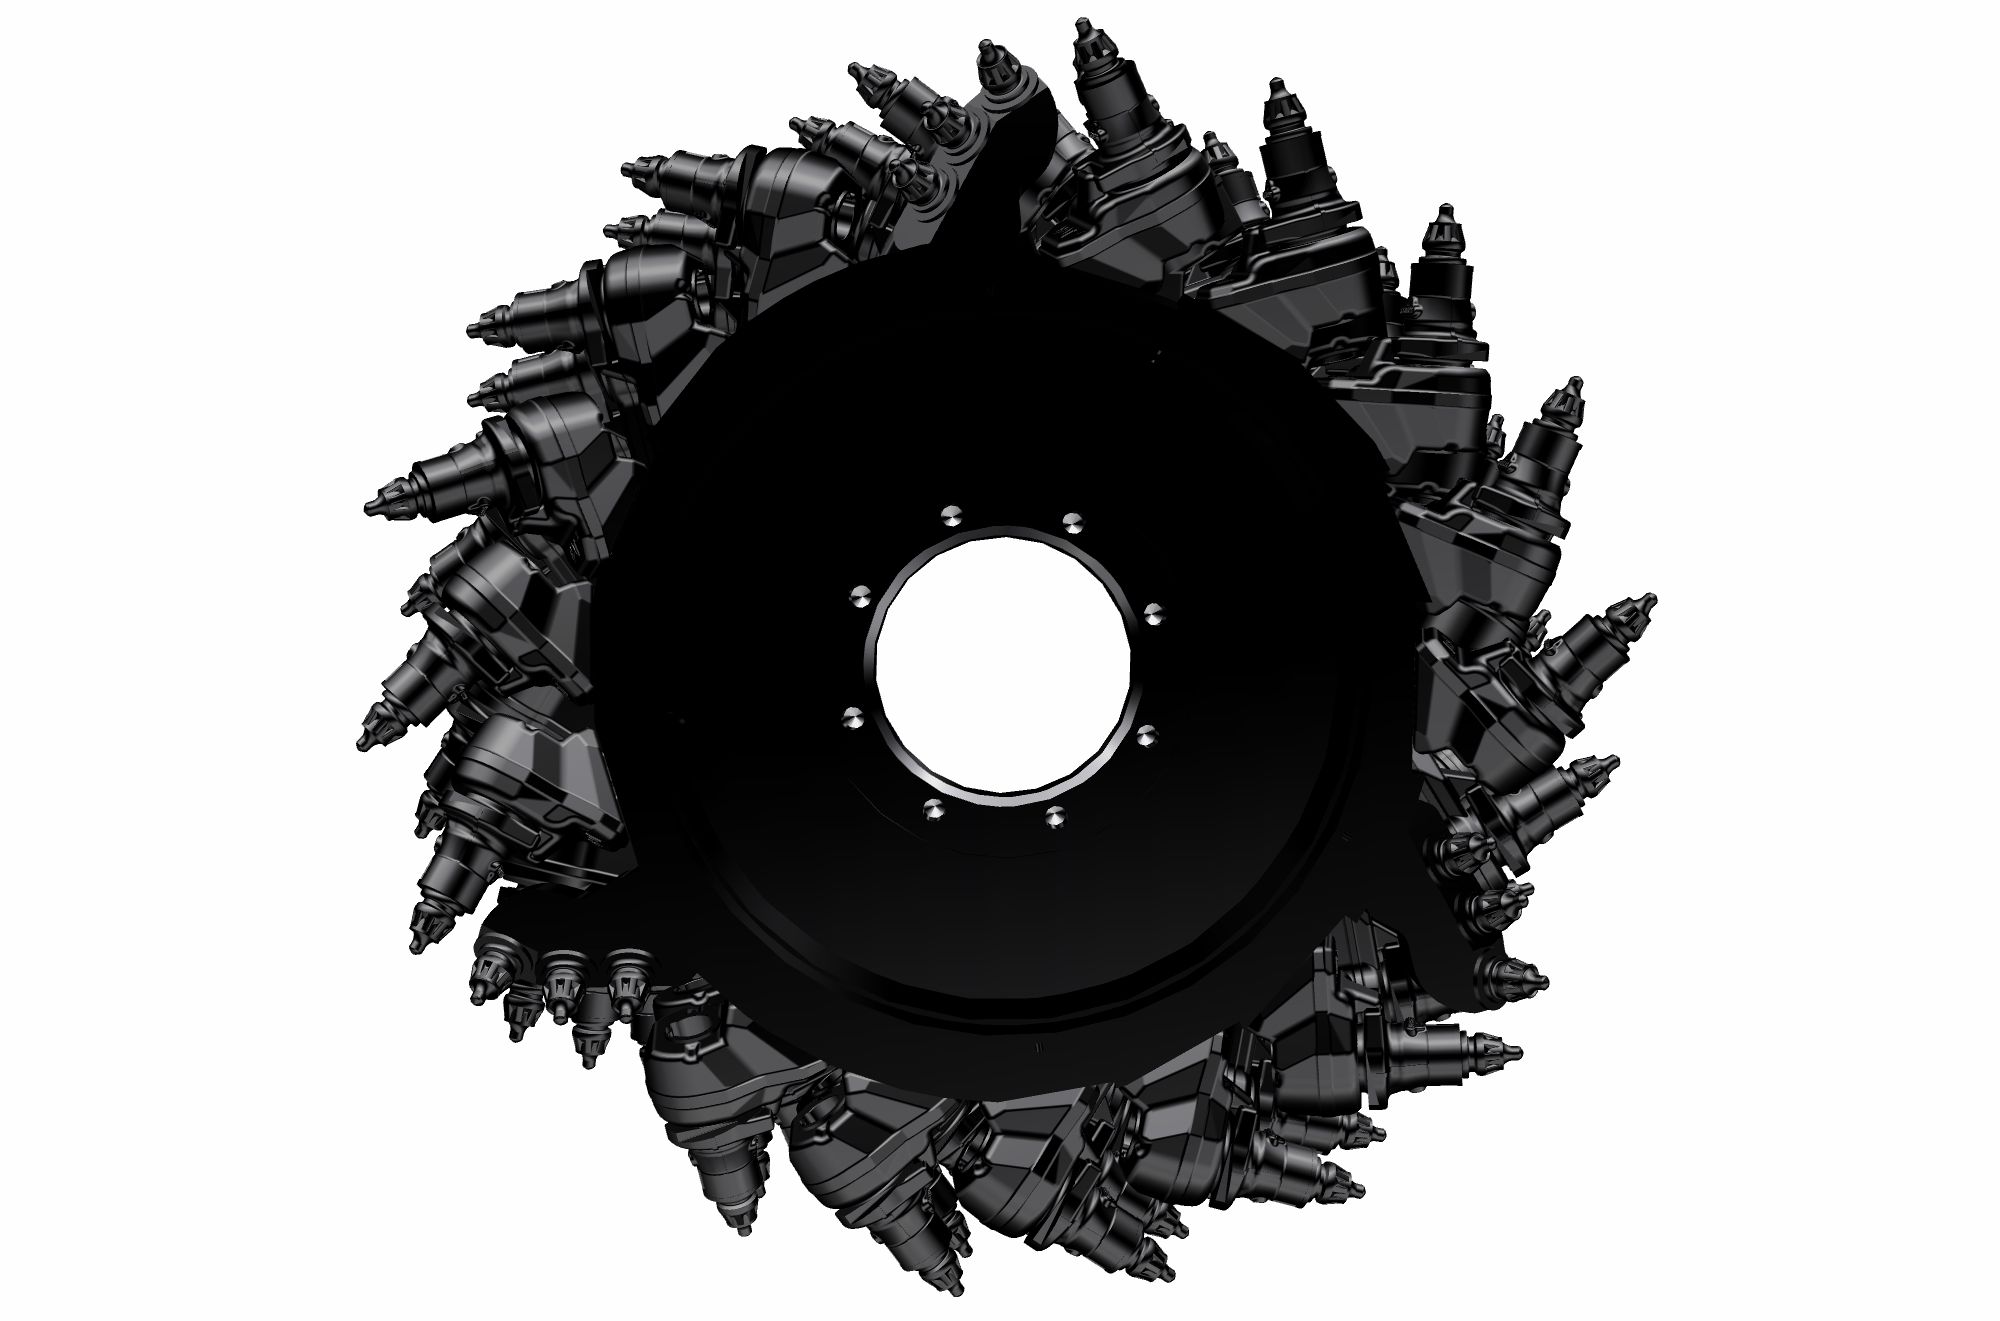 System K 1.0 m Milling Drum (8 mm spacing)